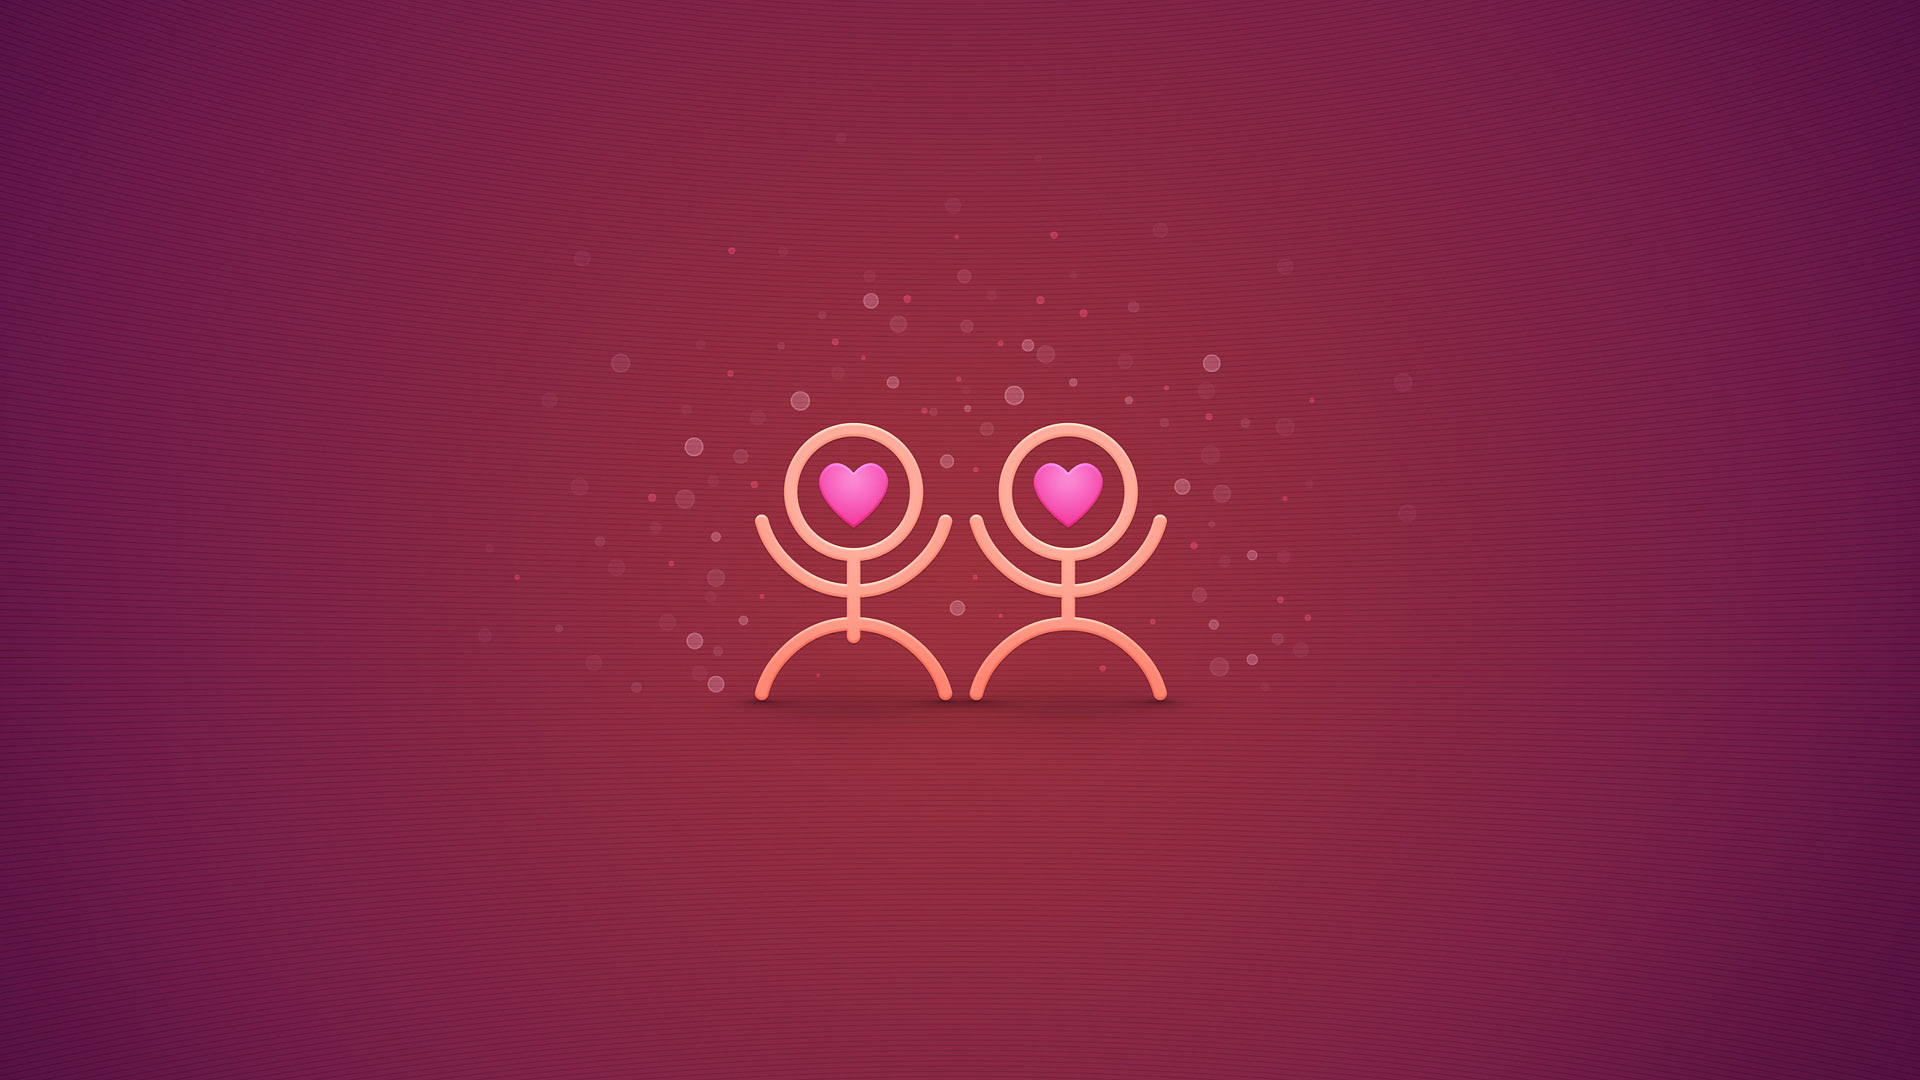 Romantic Valentine's Day Design Desktop Wallpaper